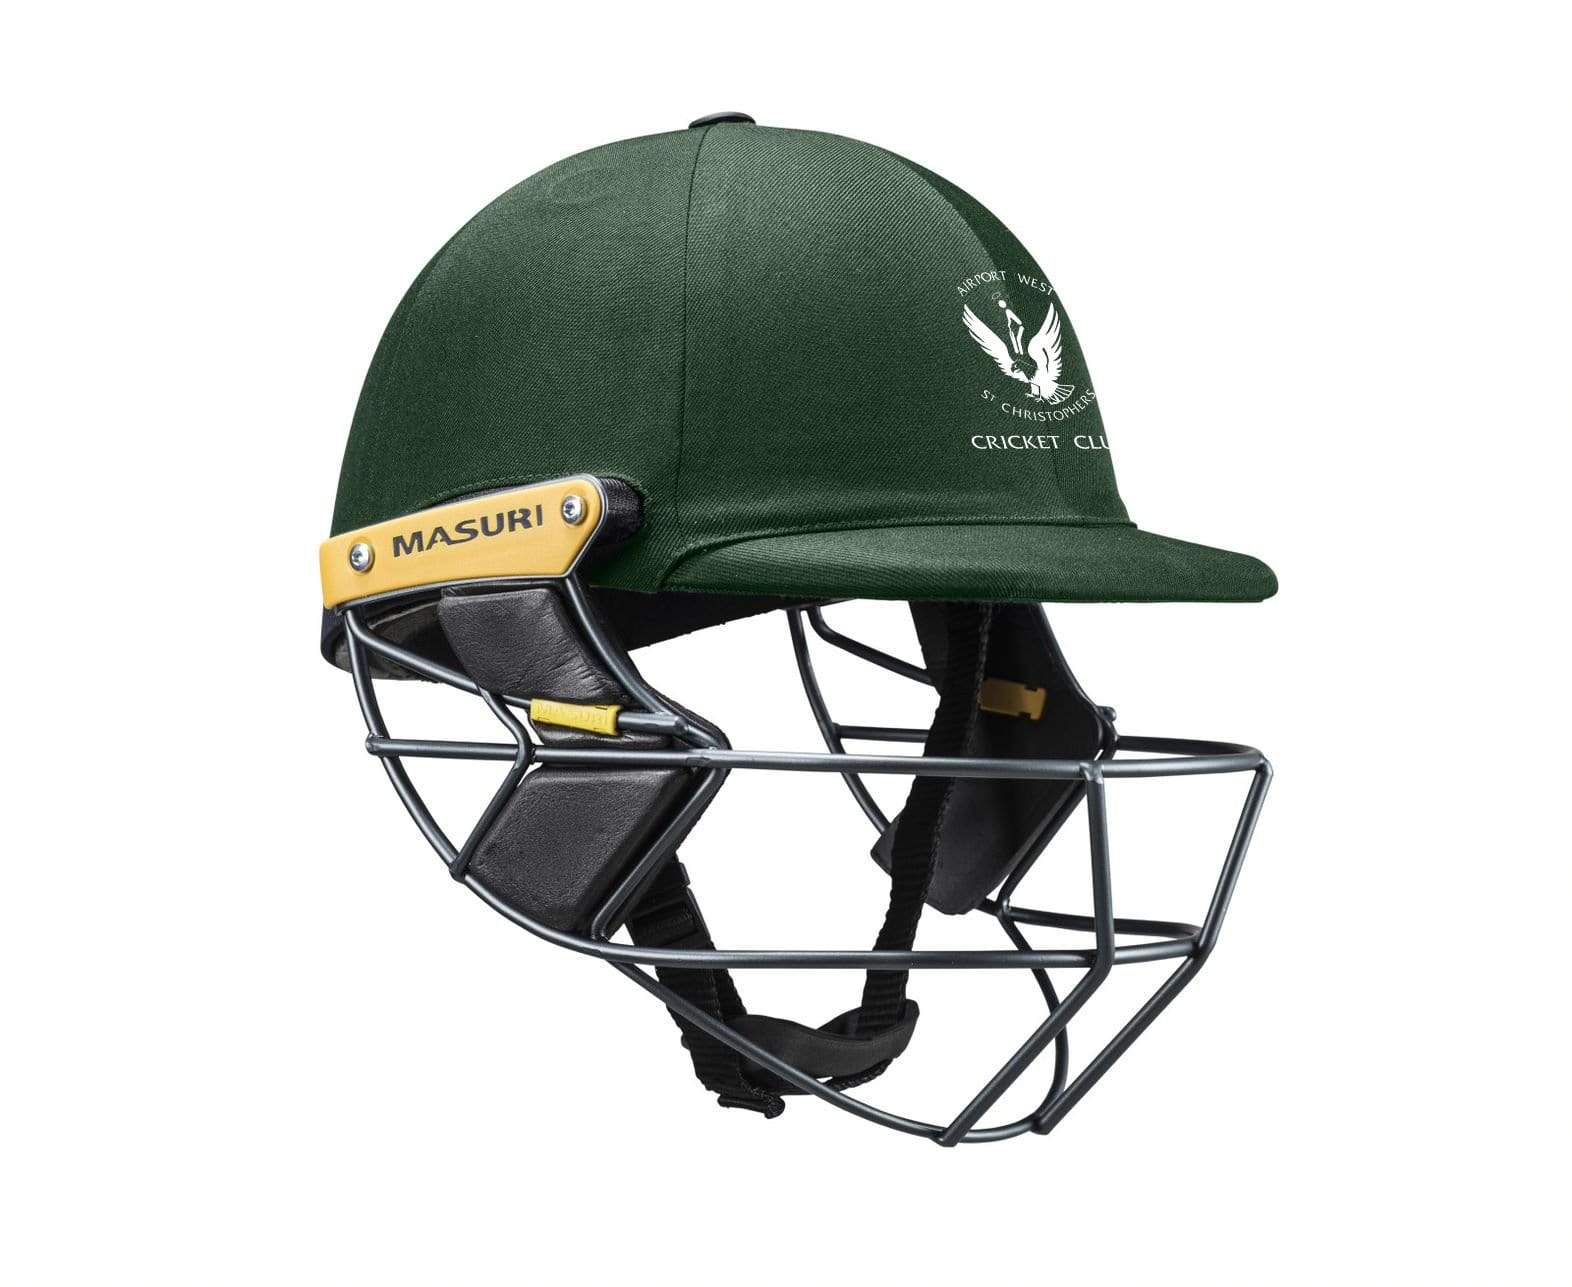 Masuri Club Helmet Airport West Cricket Club Helmet